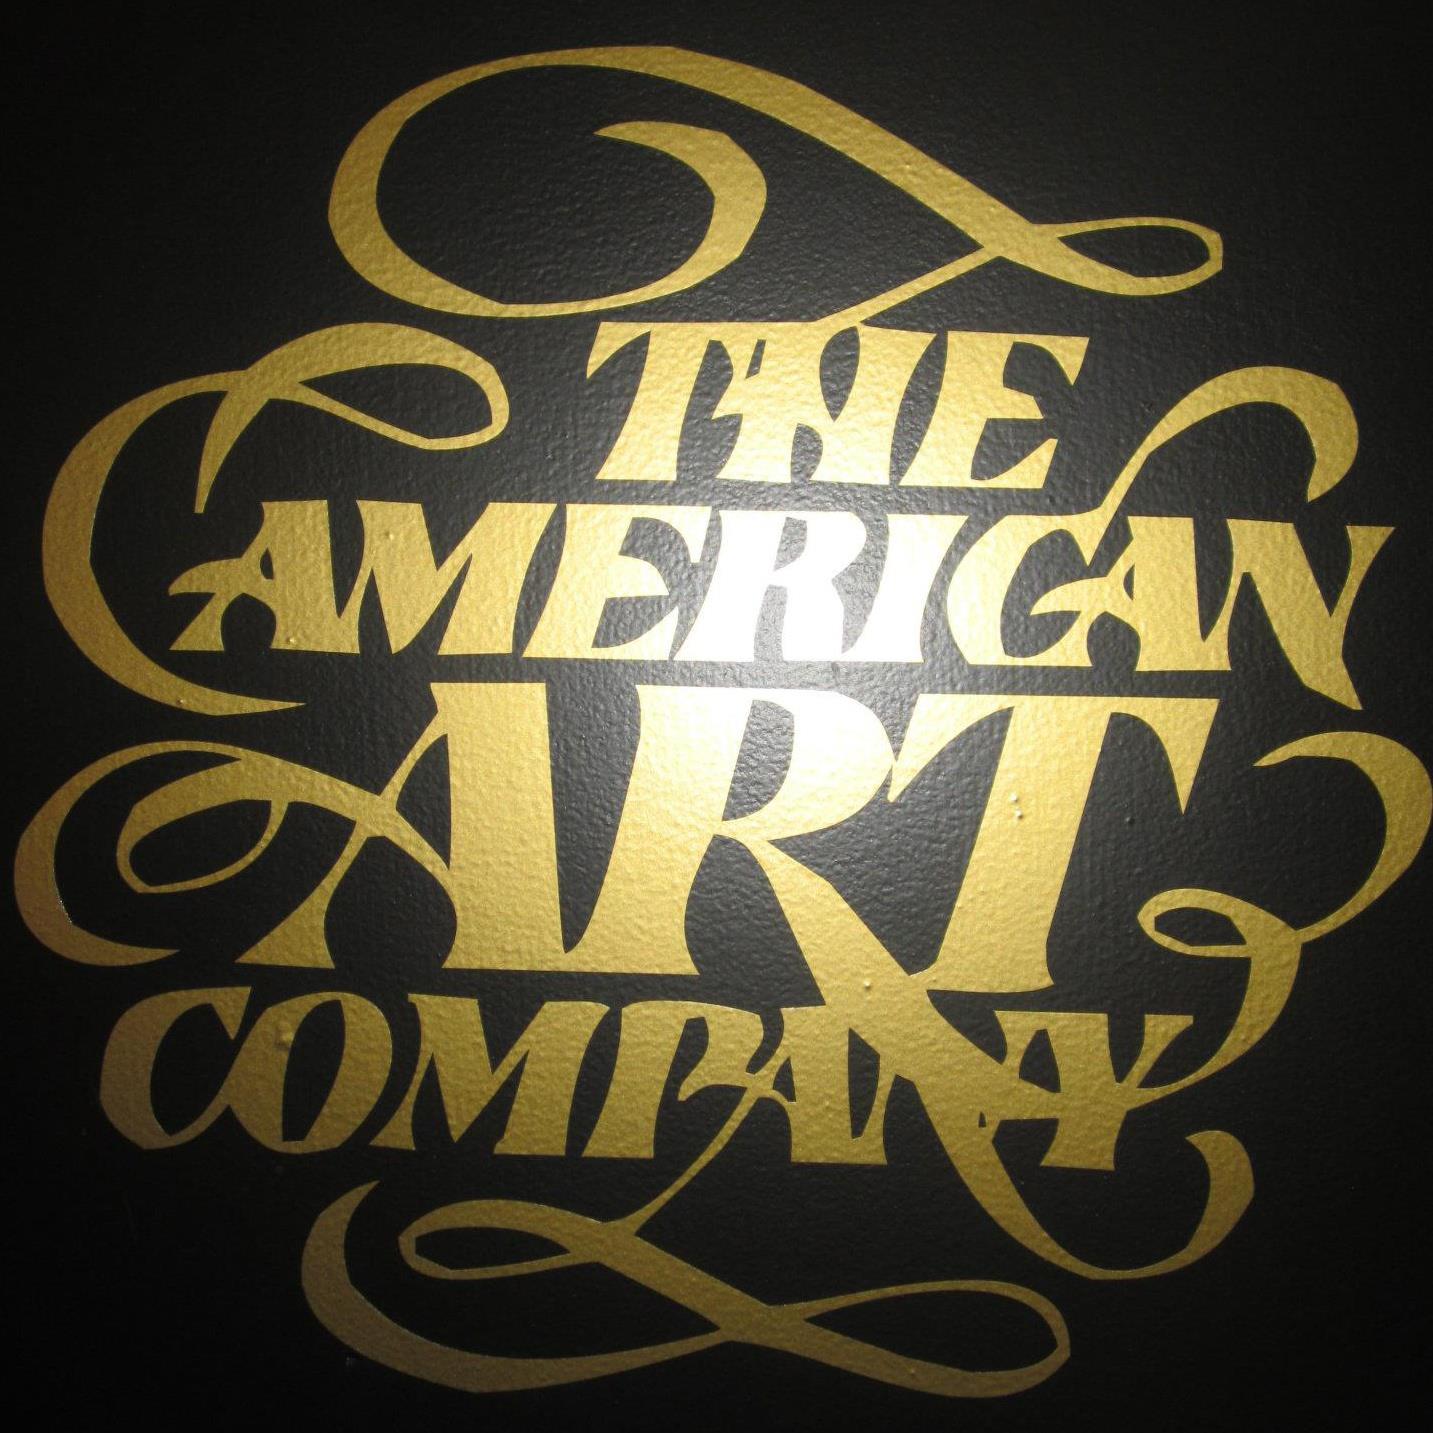 American Art Company's logo